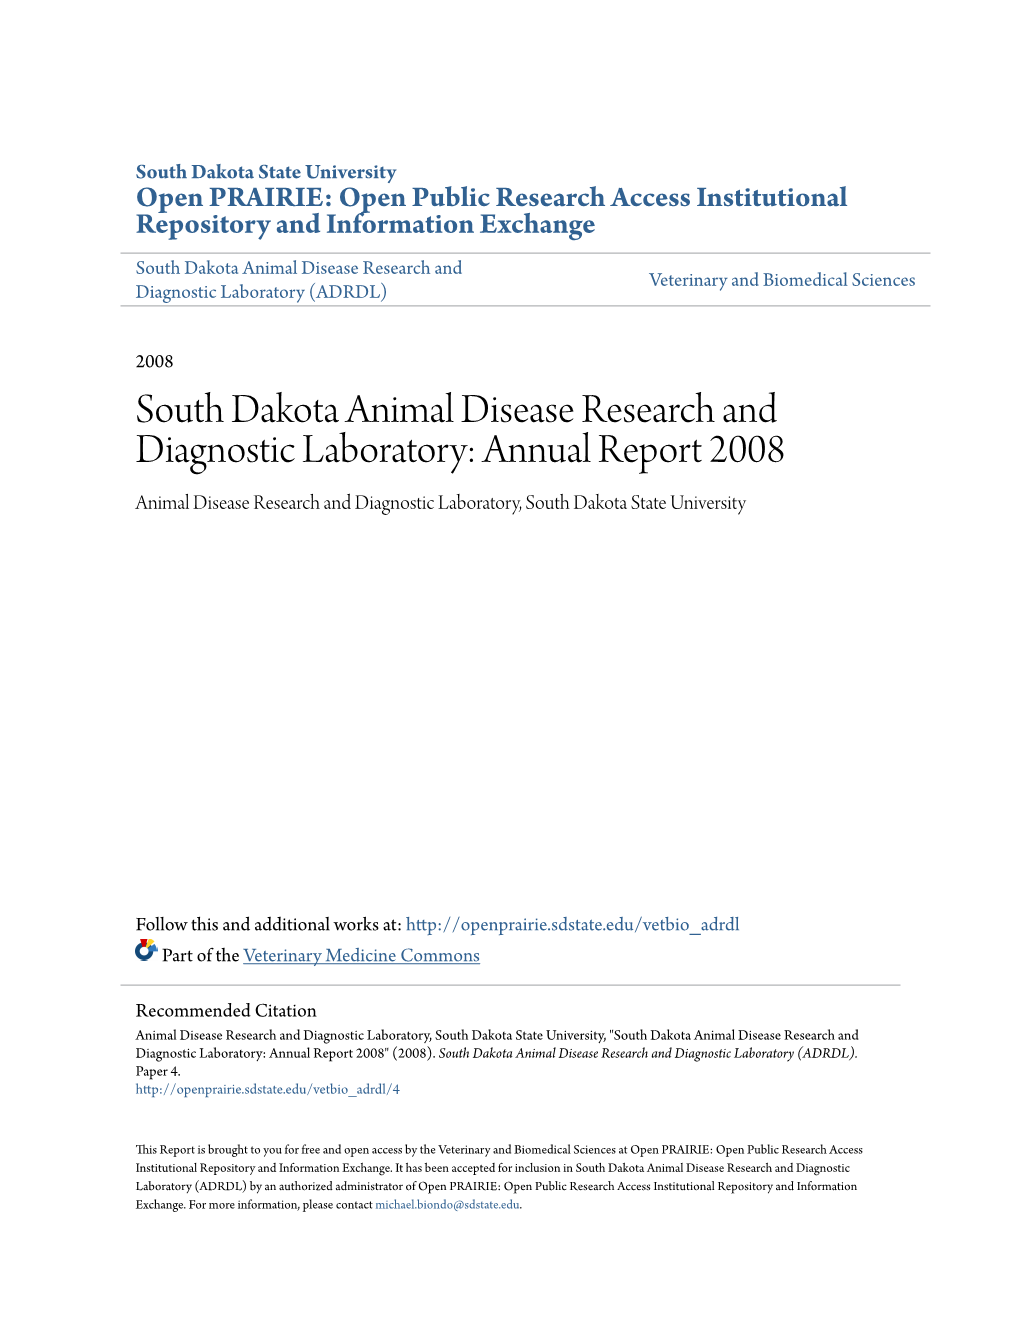 South Dakota Animal Disease Research and Diagnostic Laboratory: Annual Report 2008 Animal Disease Research and Diagnostic Laboratory, South Dakota State University